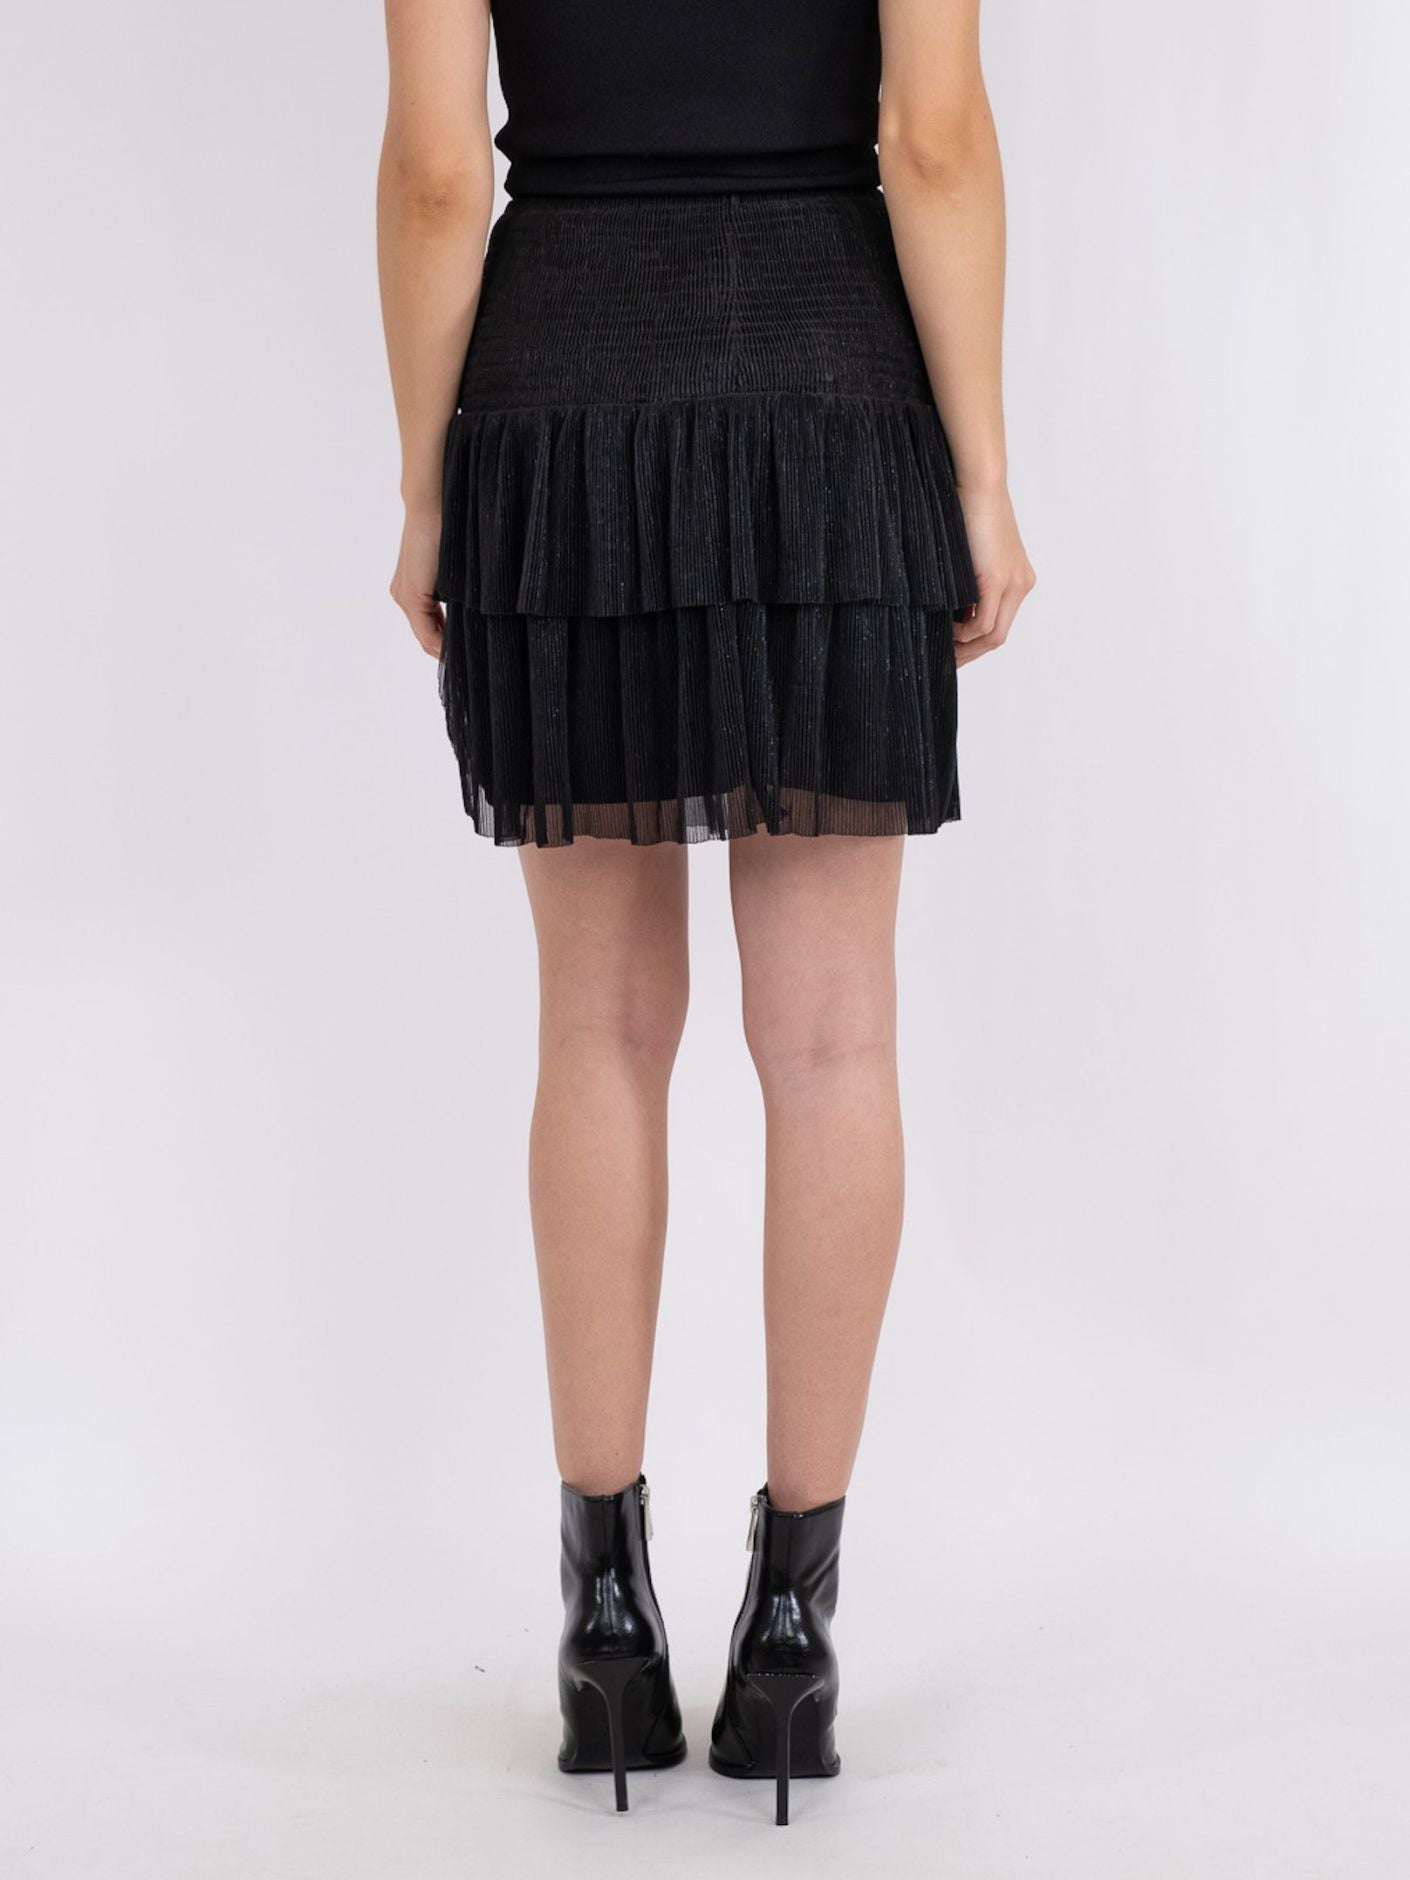 Carin Glitz Skirt Black